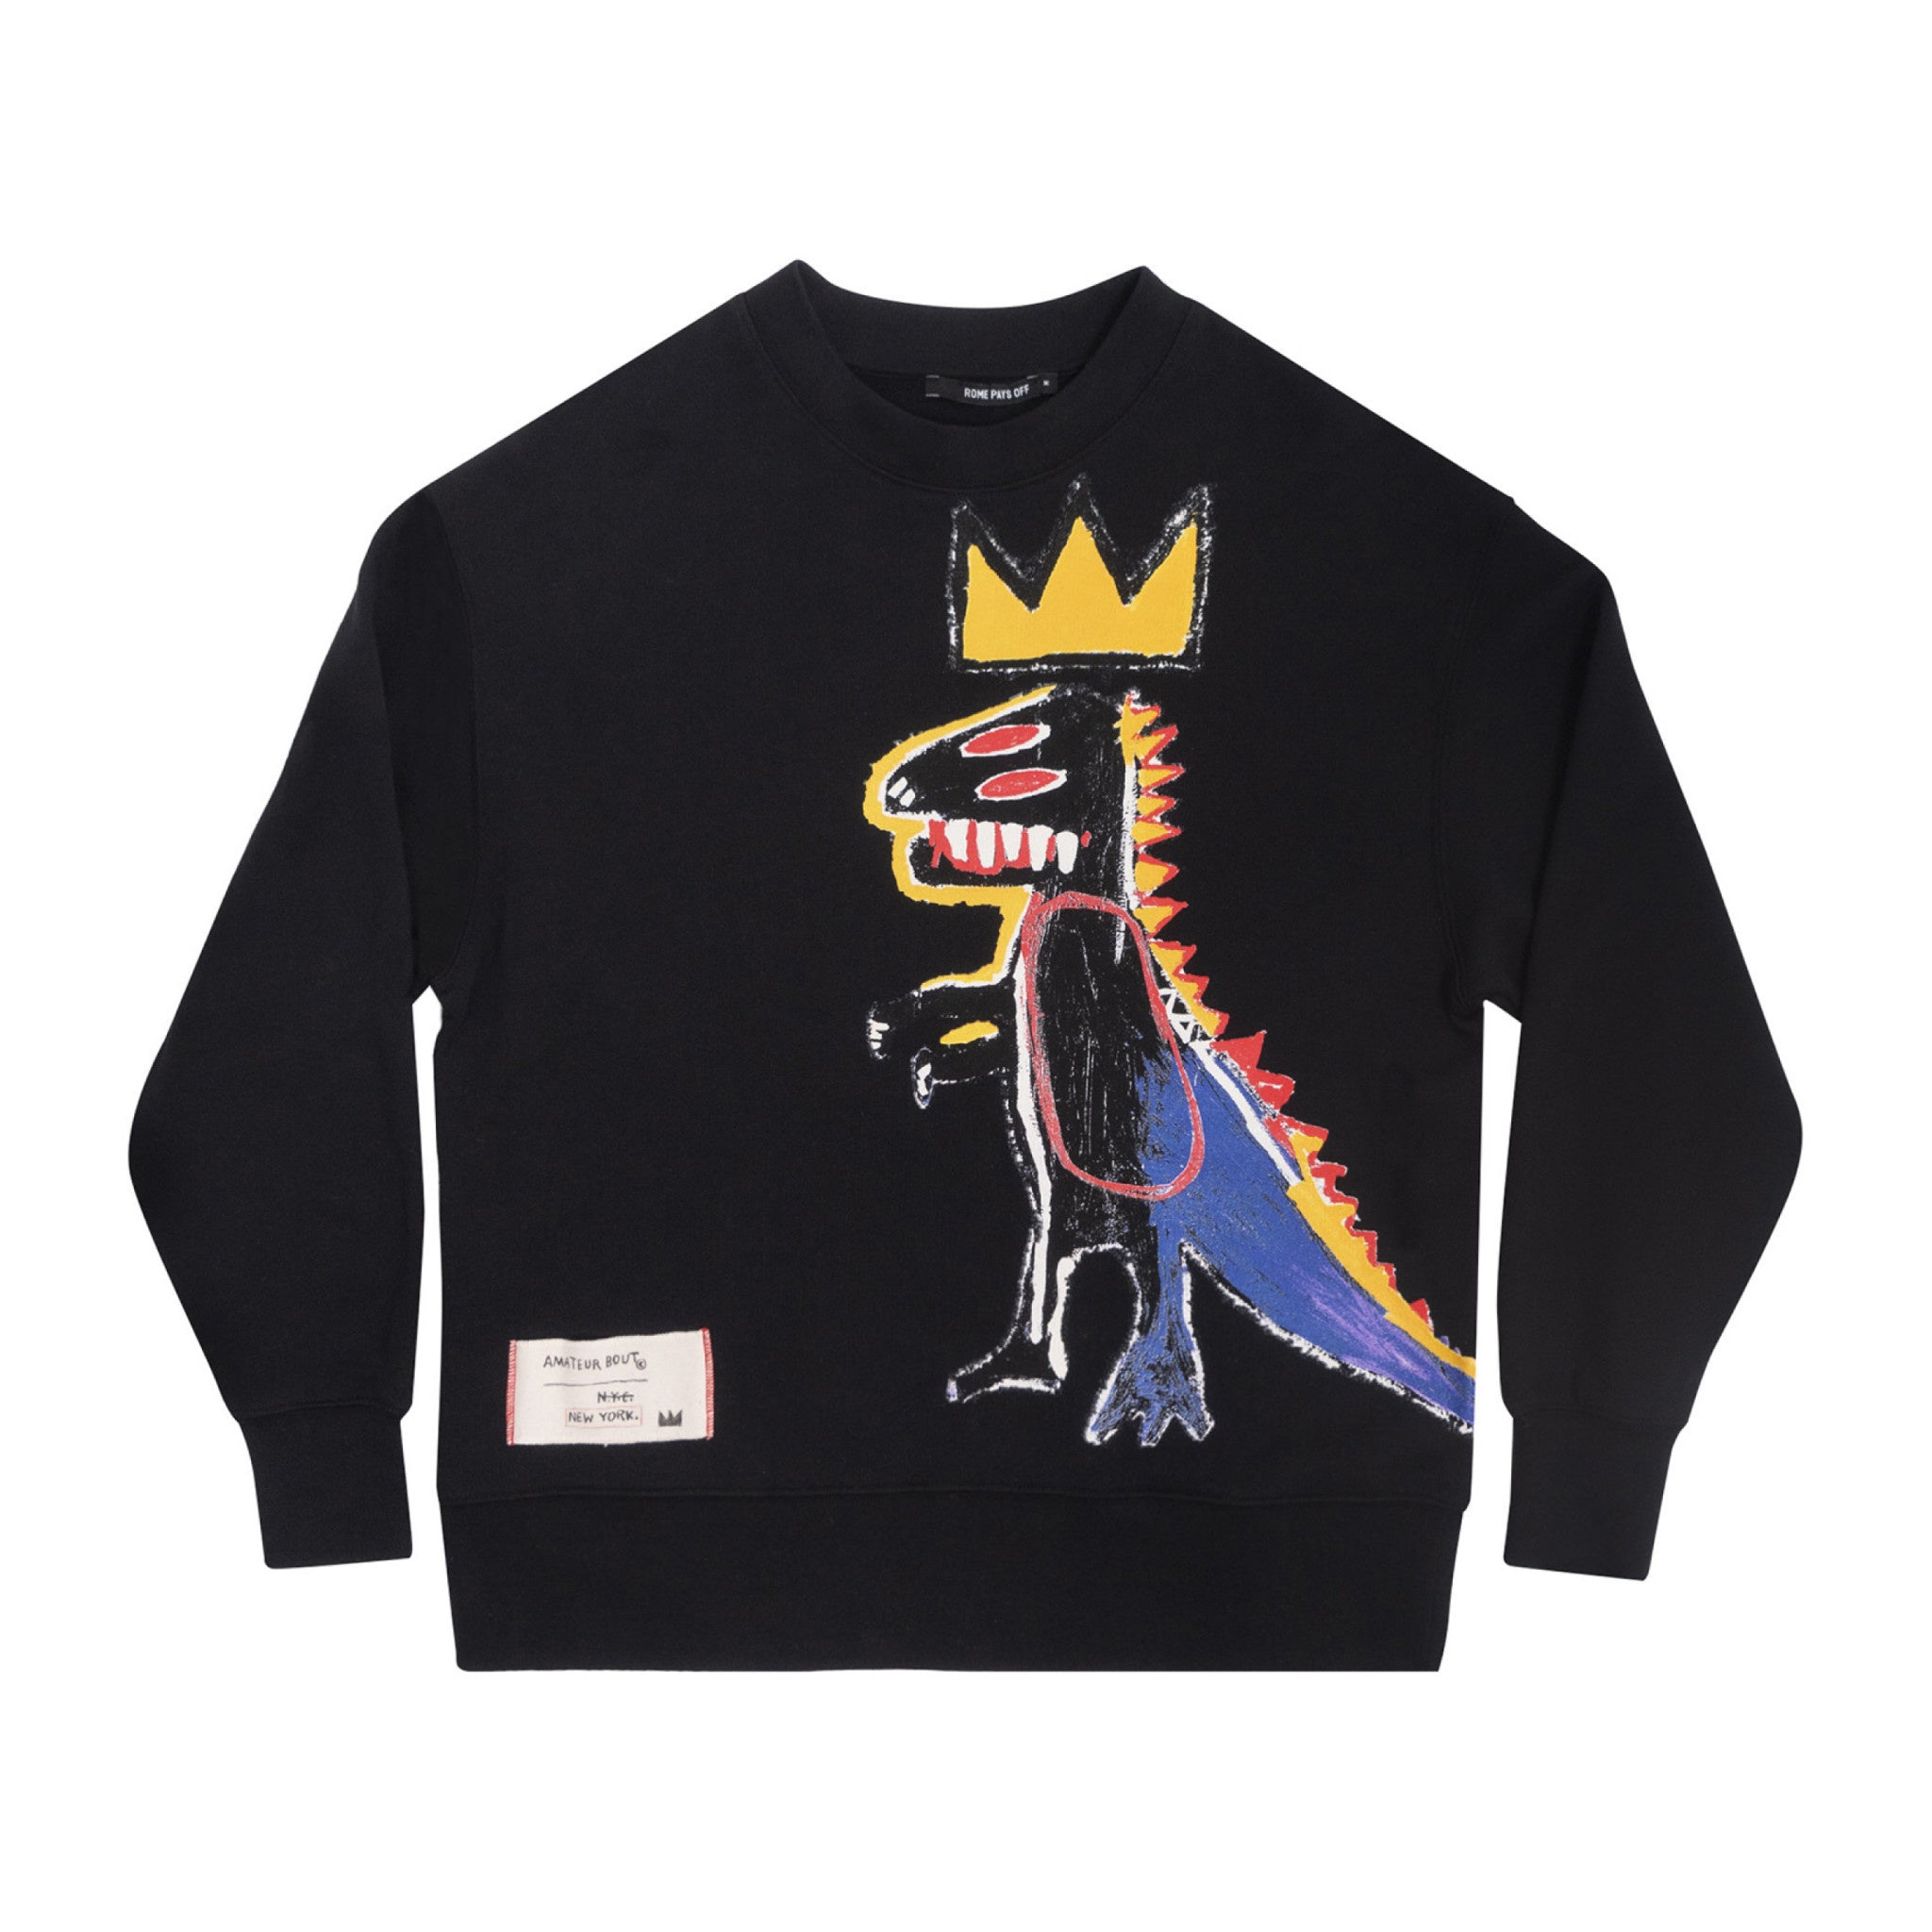 Basquiat PEZ DISPENSER Crewneck Sweatshirt - Wynwood Walls Shop